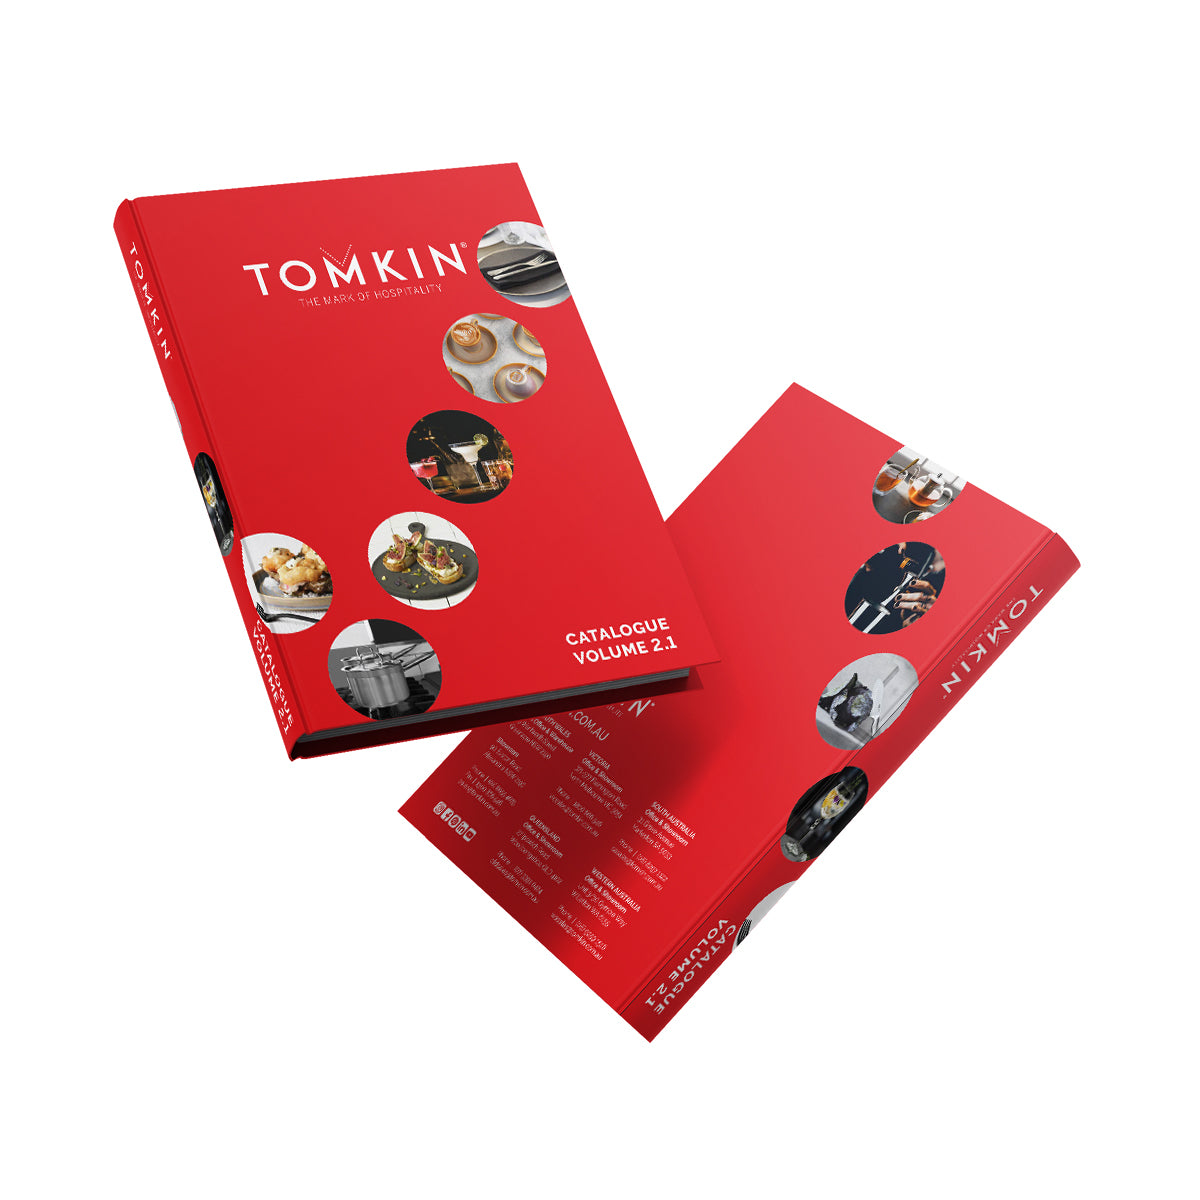 Tomkin Catalogue Volume 2.1